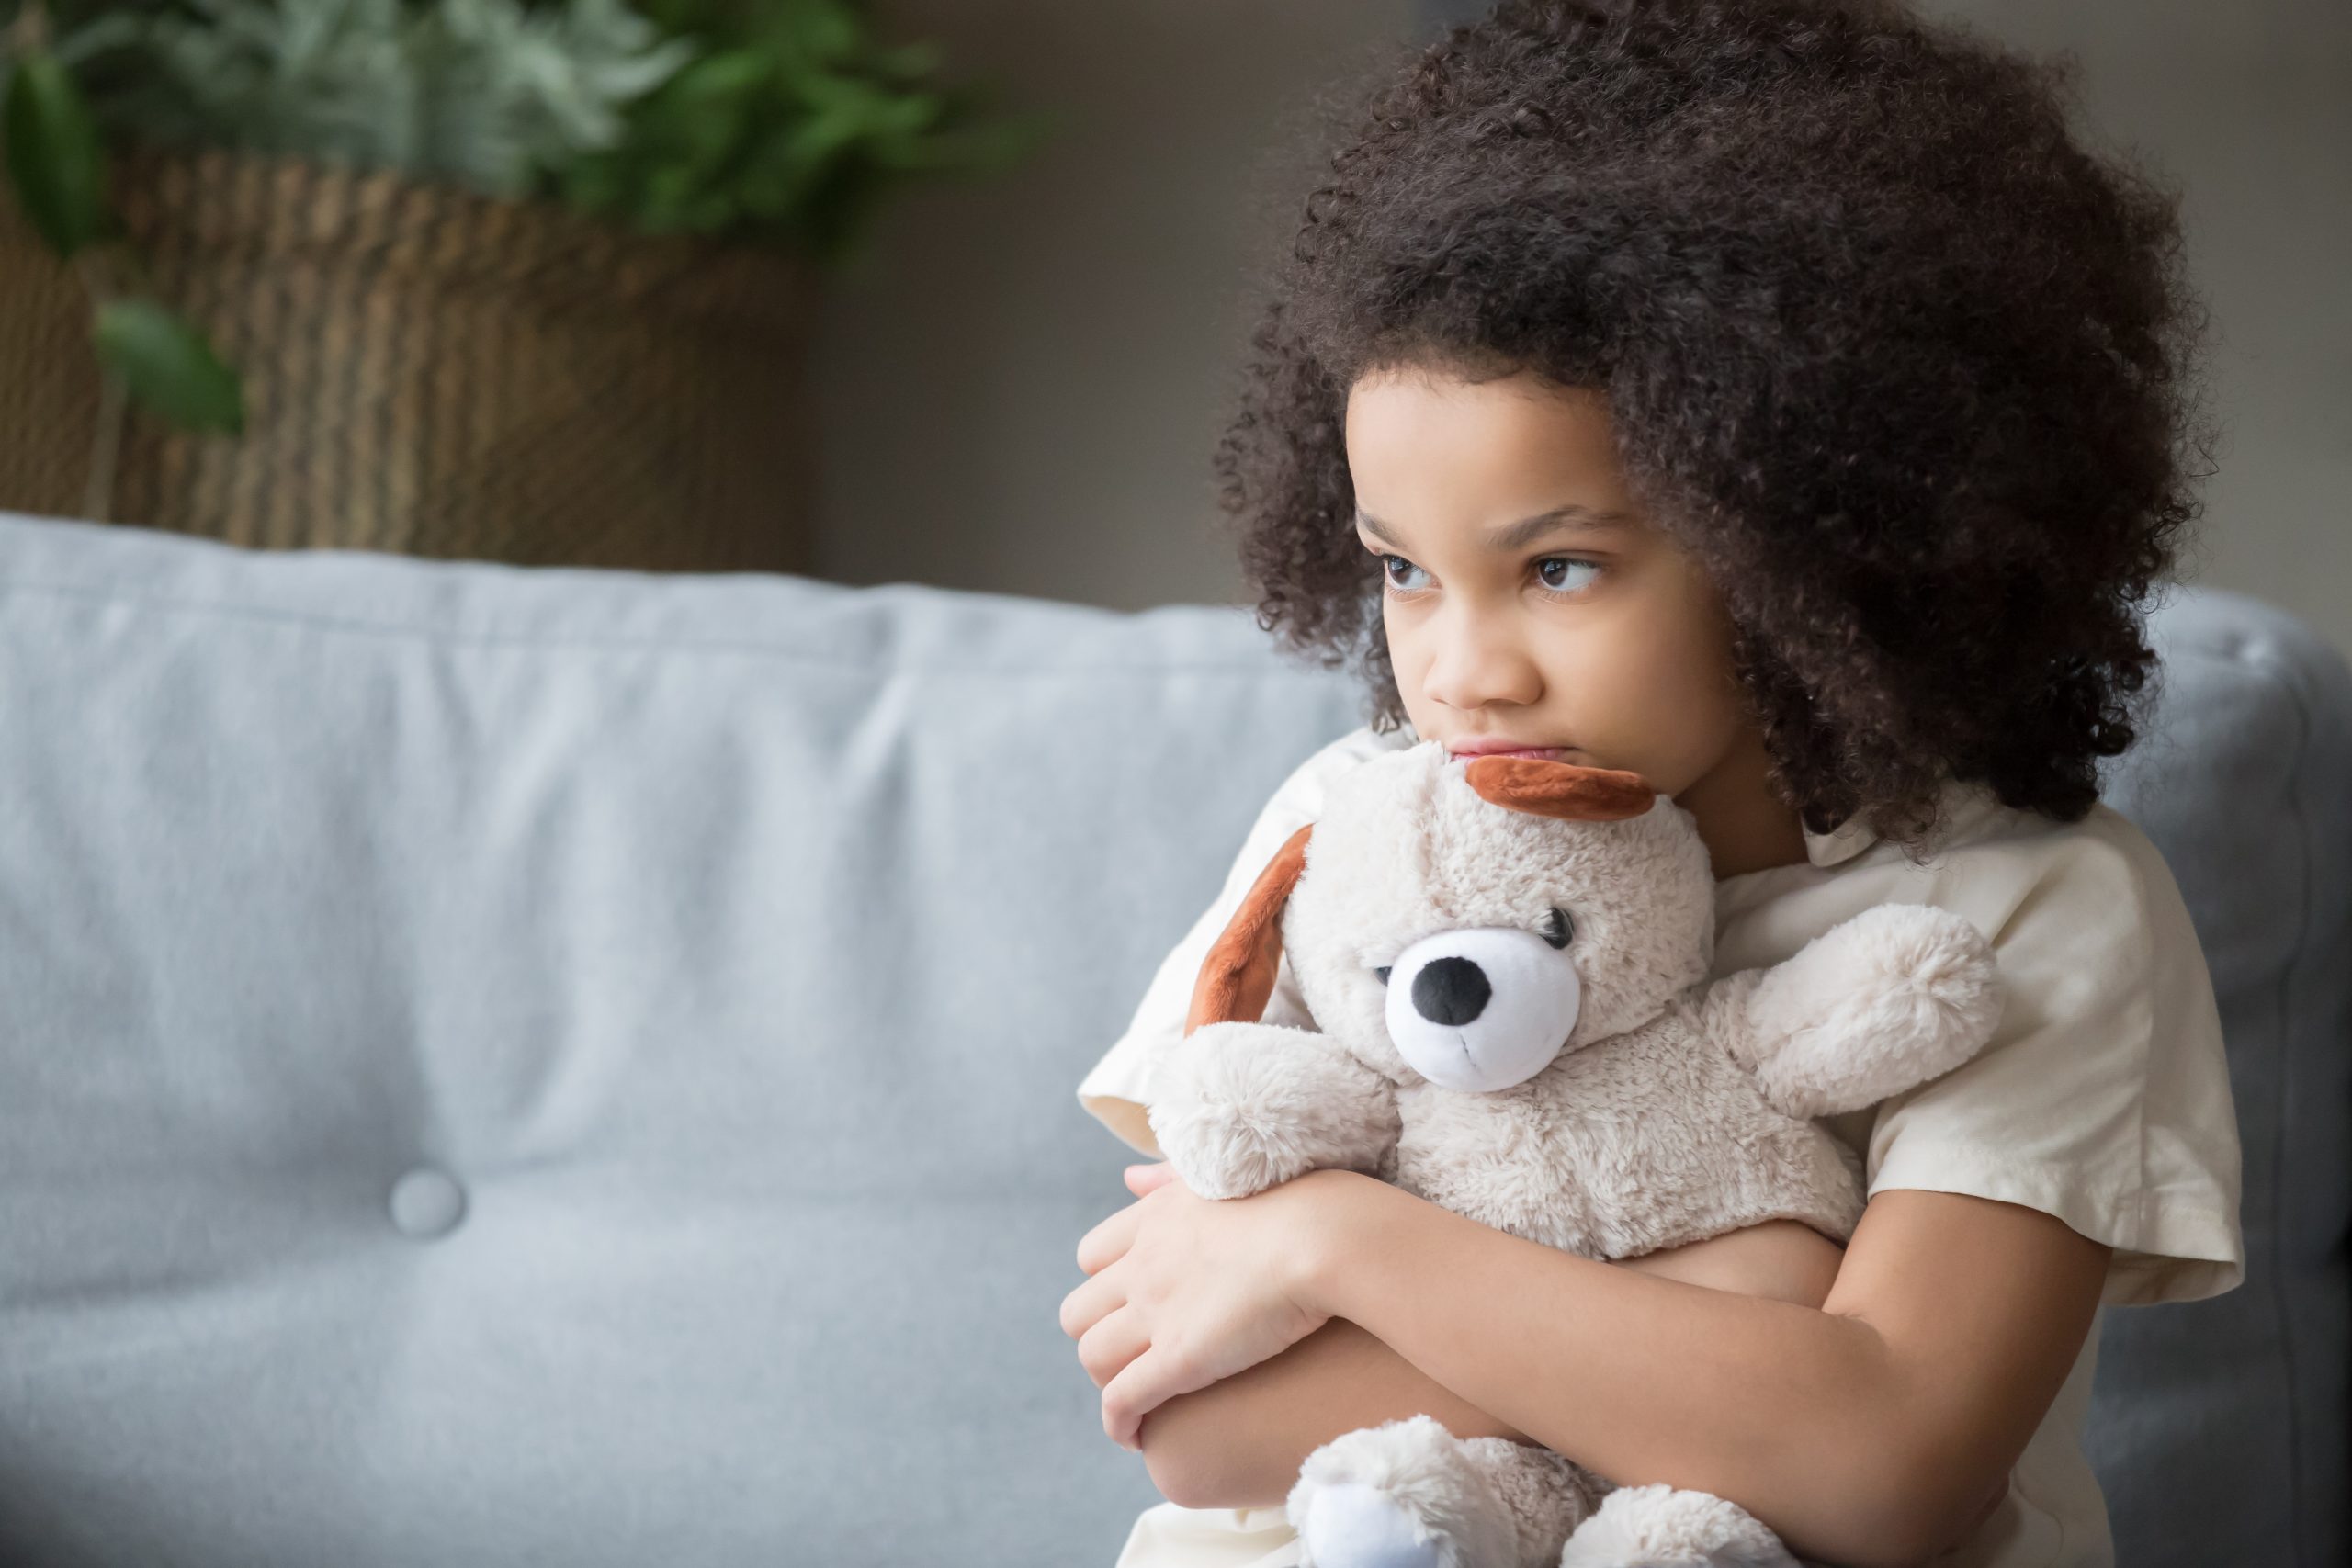 Young black girl hugs teddy bear toy